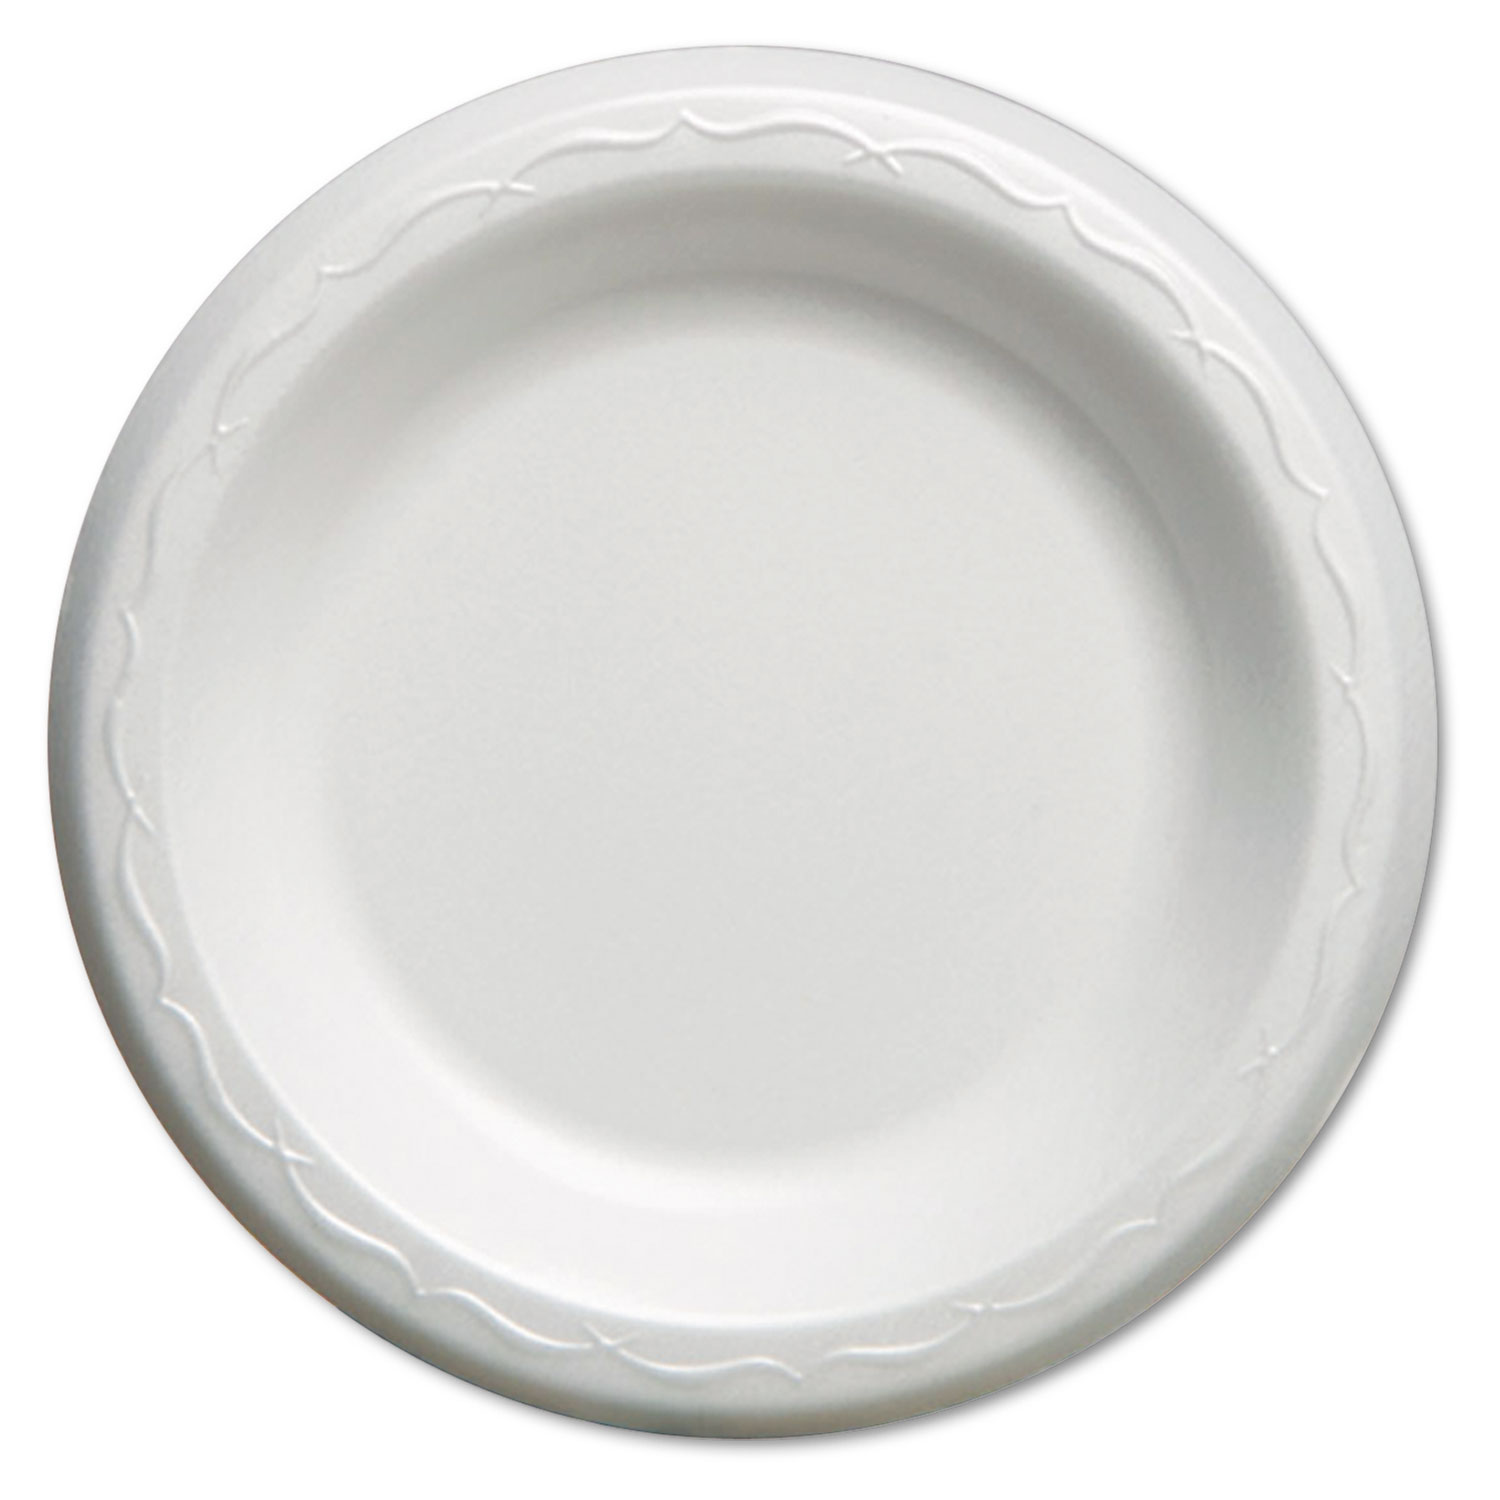  Genpak LAM06--- Elite Laminated Foam Plates, 6 Inches, White, Round, 125/Pack, 8 Pack/Carton (GNPLAM06) 